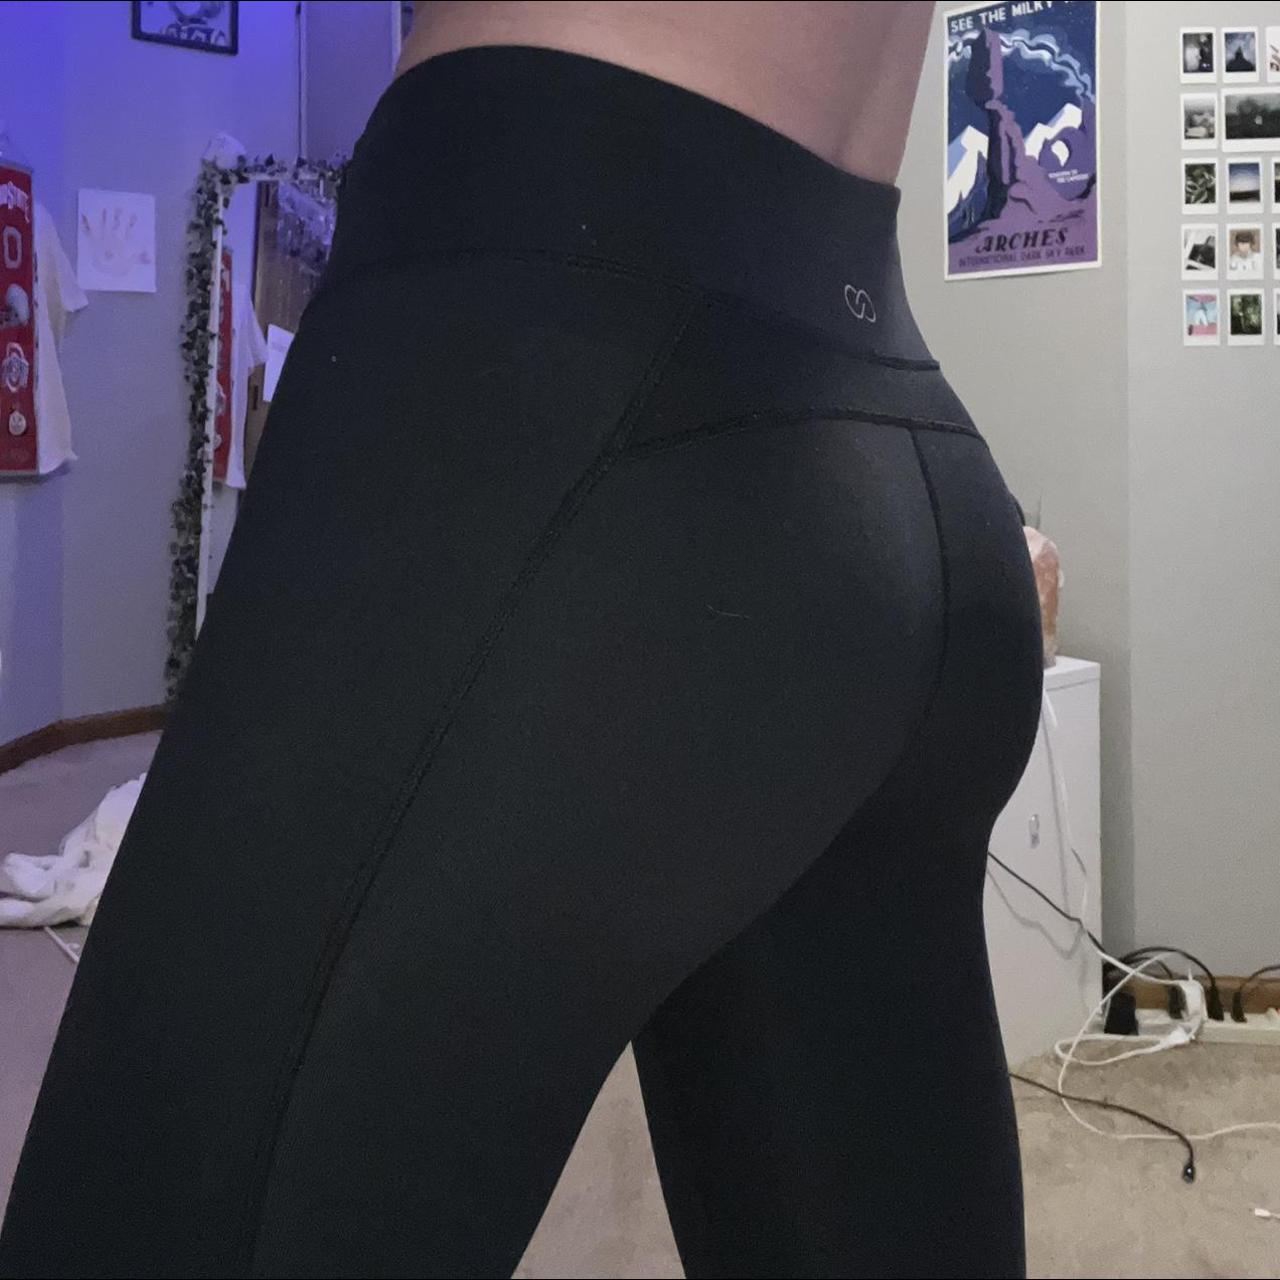 CALIA black capri leggings •the tag was ripped out, - Depop